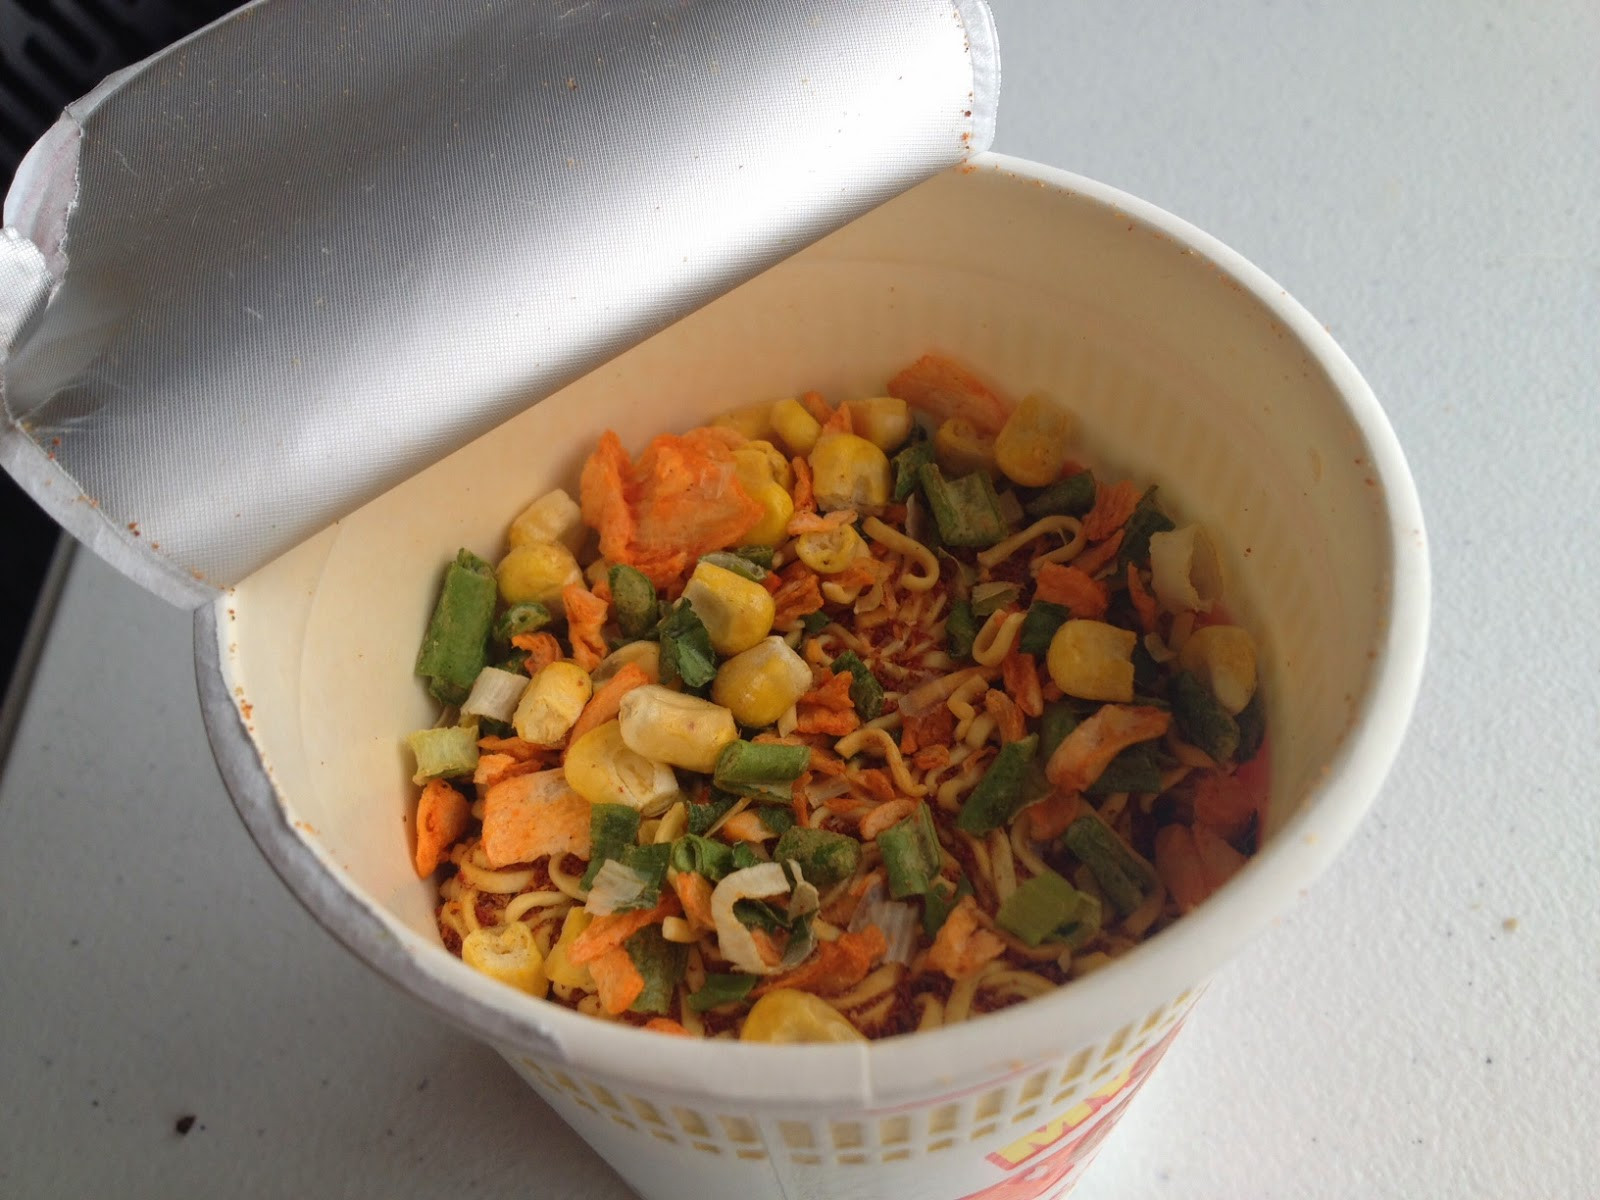 Microwave Cup Of Noodles
 Vegan Crunk Ramen Noodles From Japan